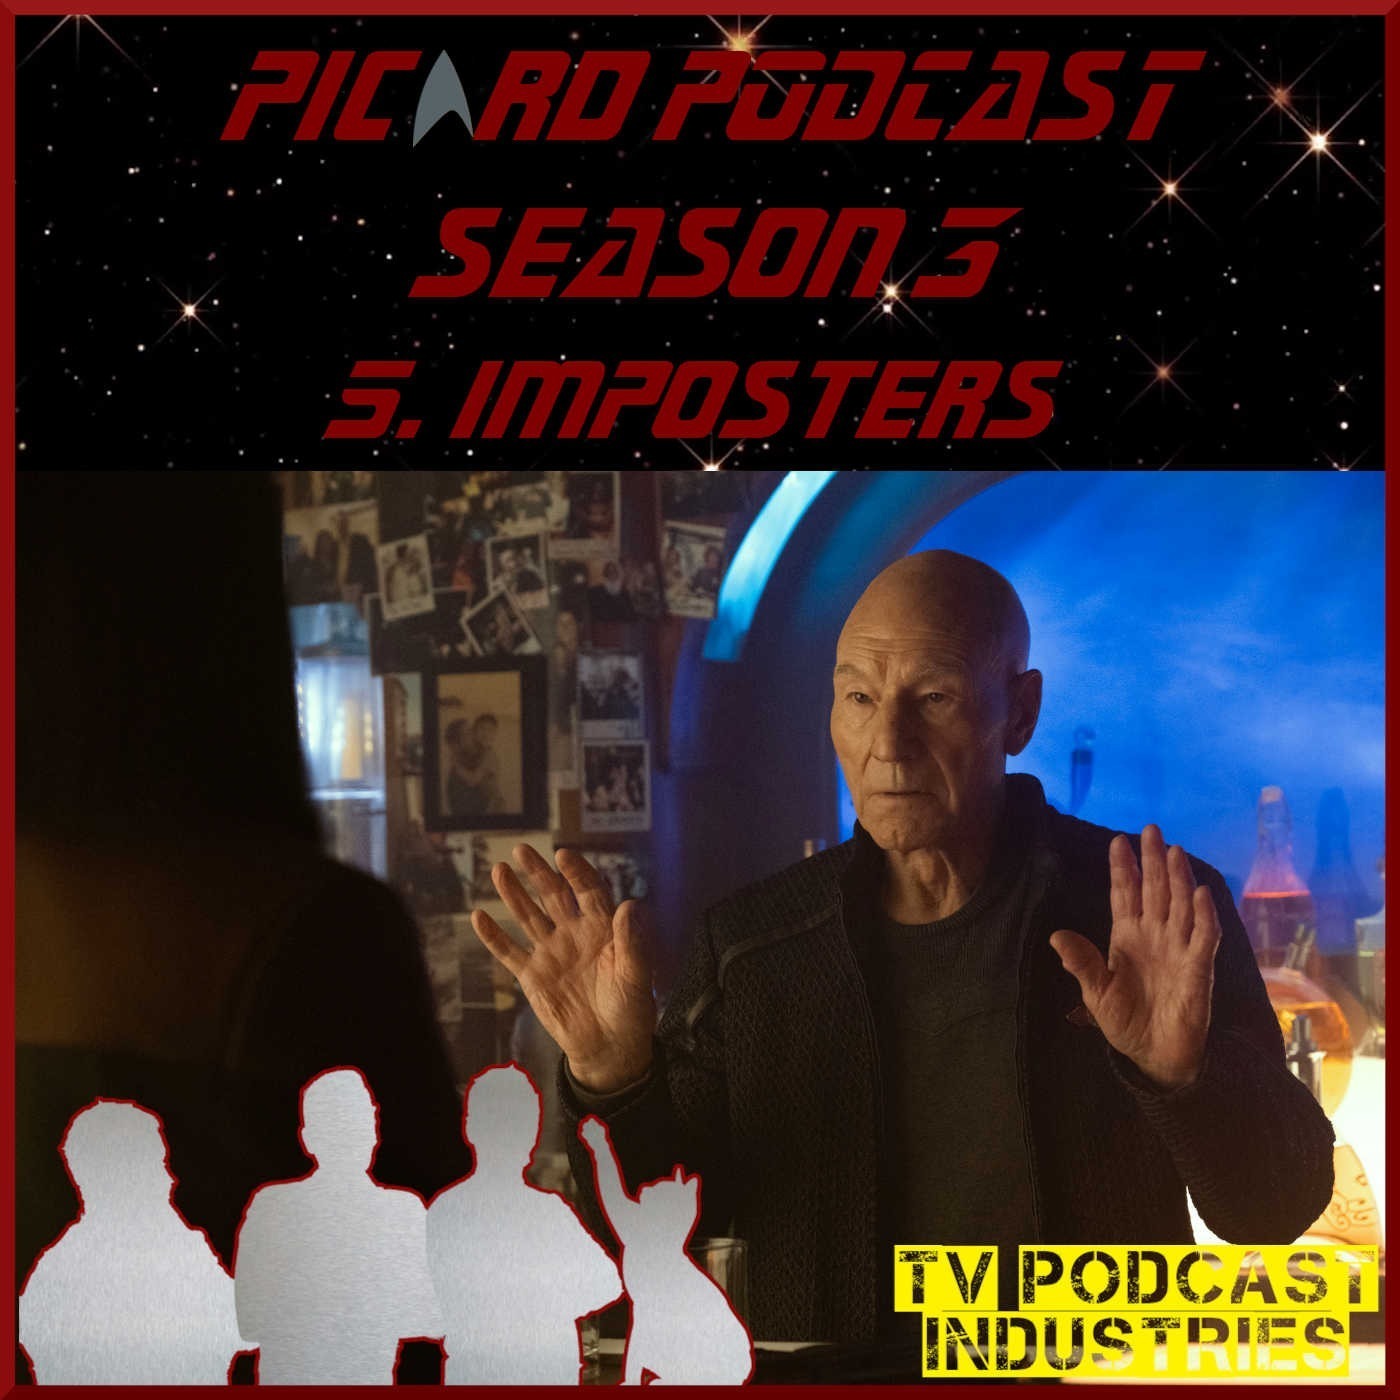 Star Trek Picard 305 